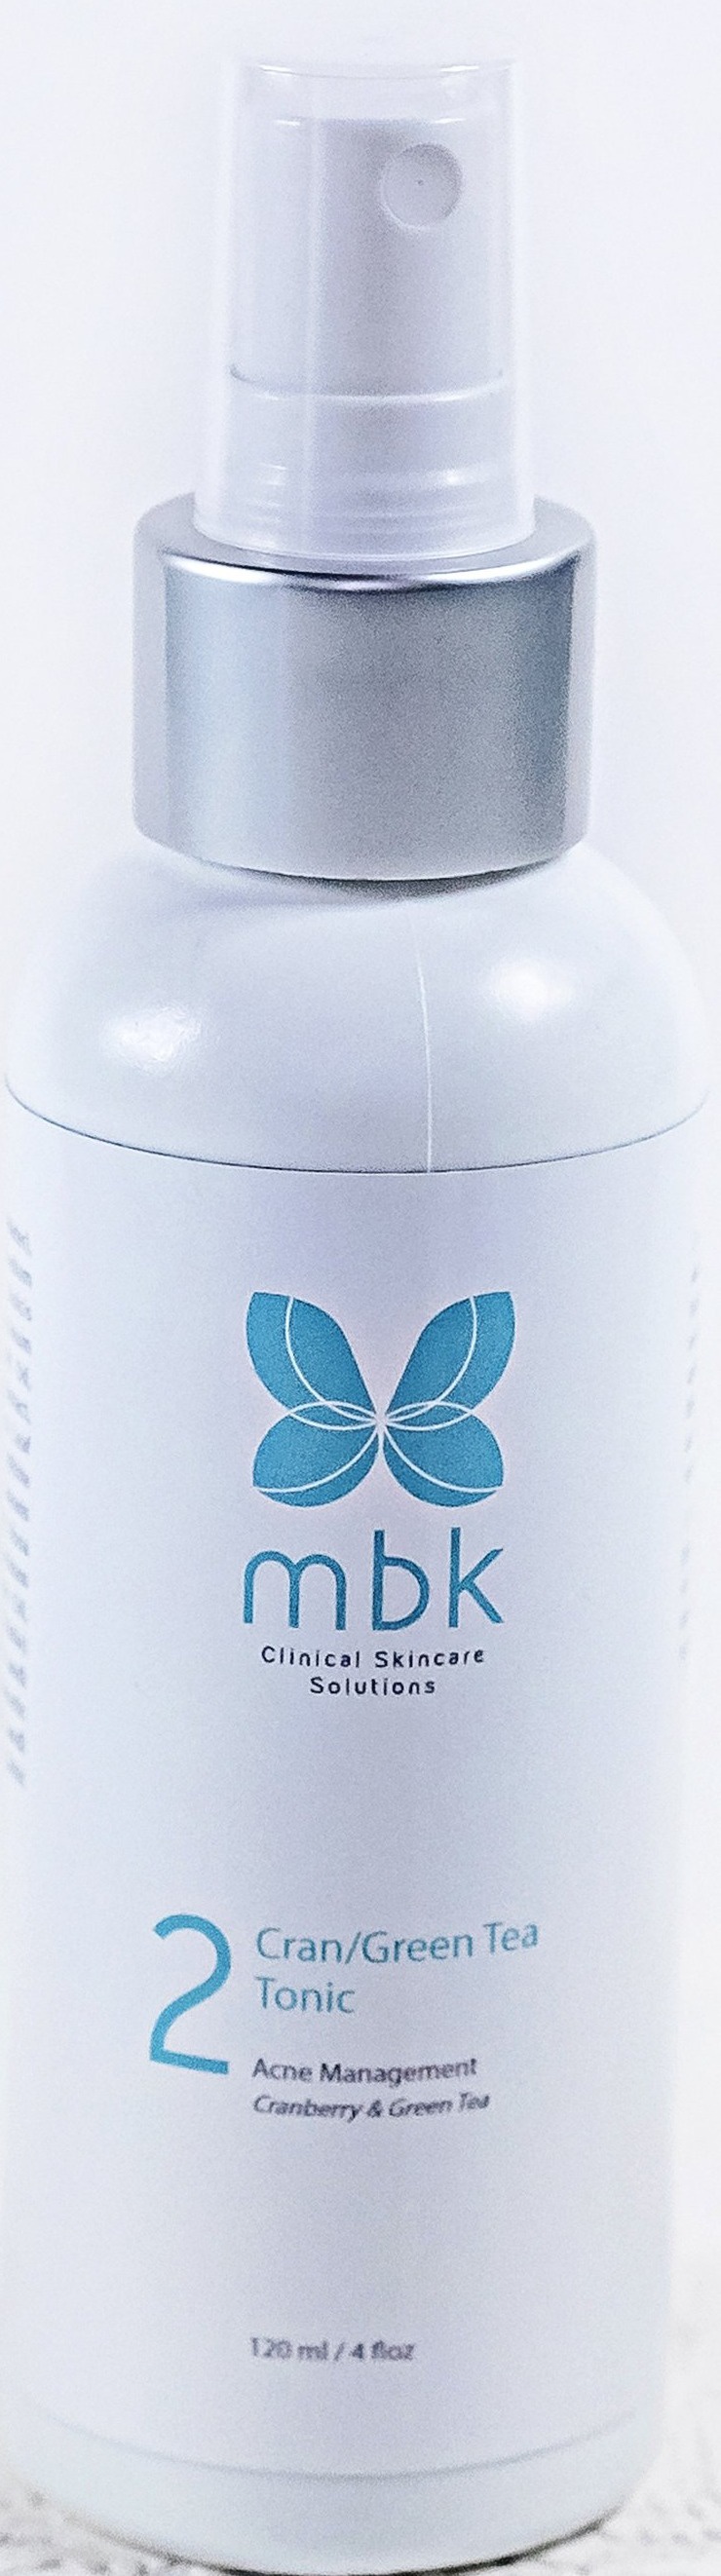 MBK Clinical Skincare Solutions Cran/Green Tea Tonic